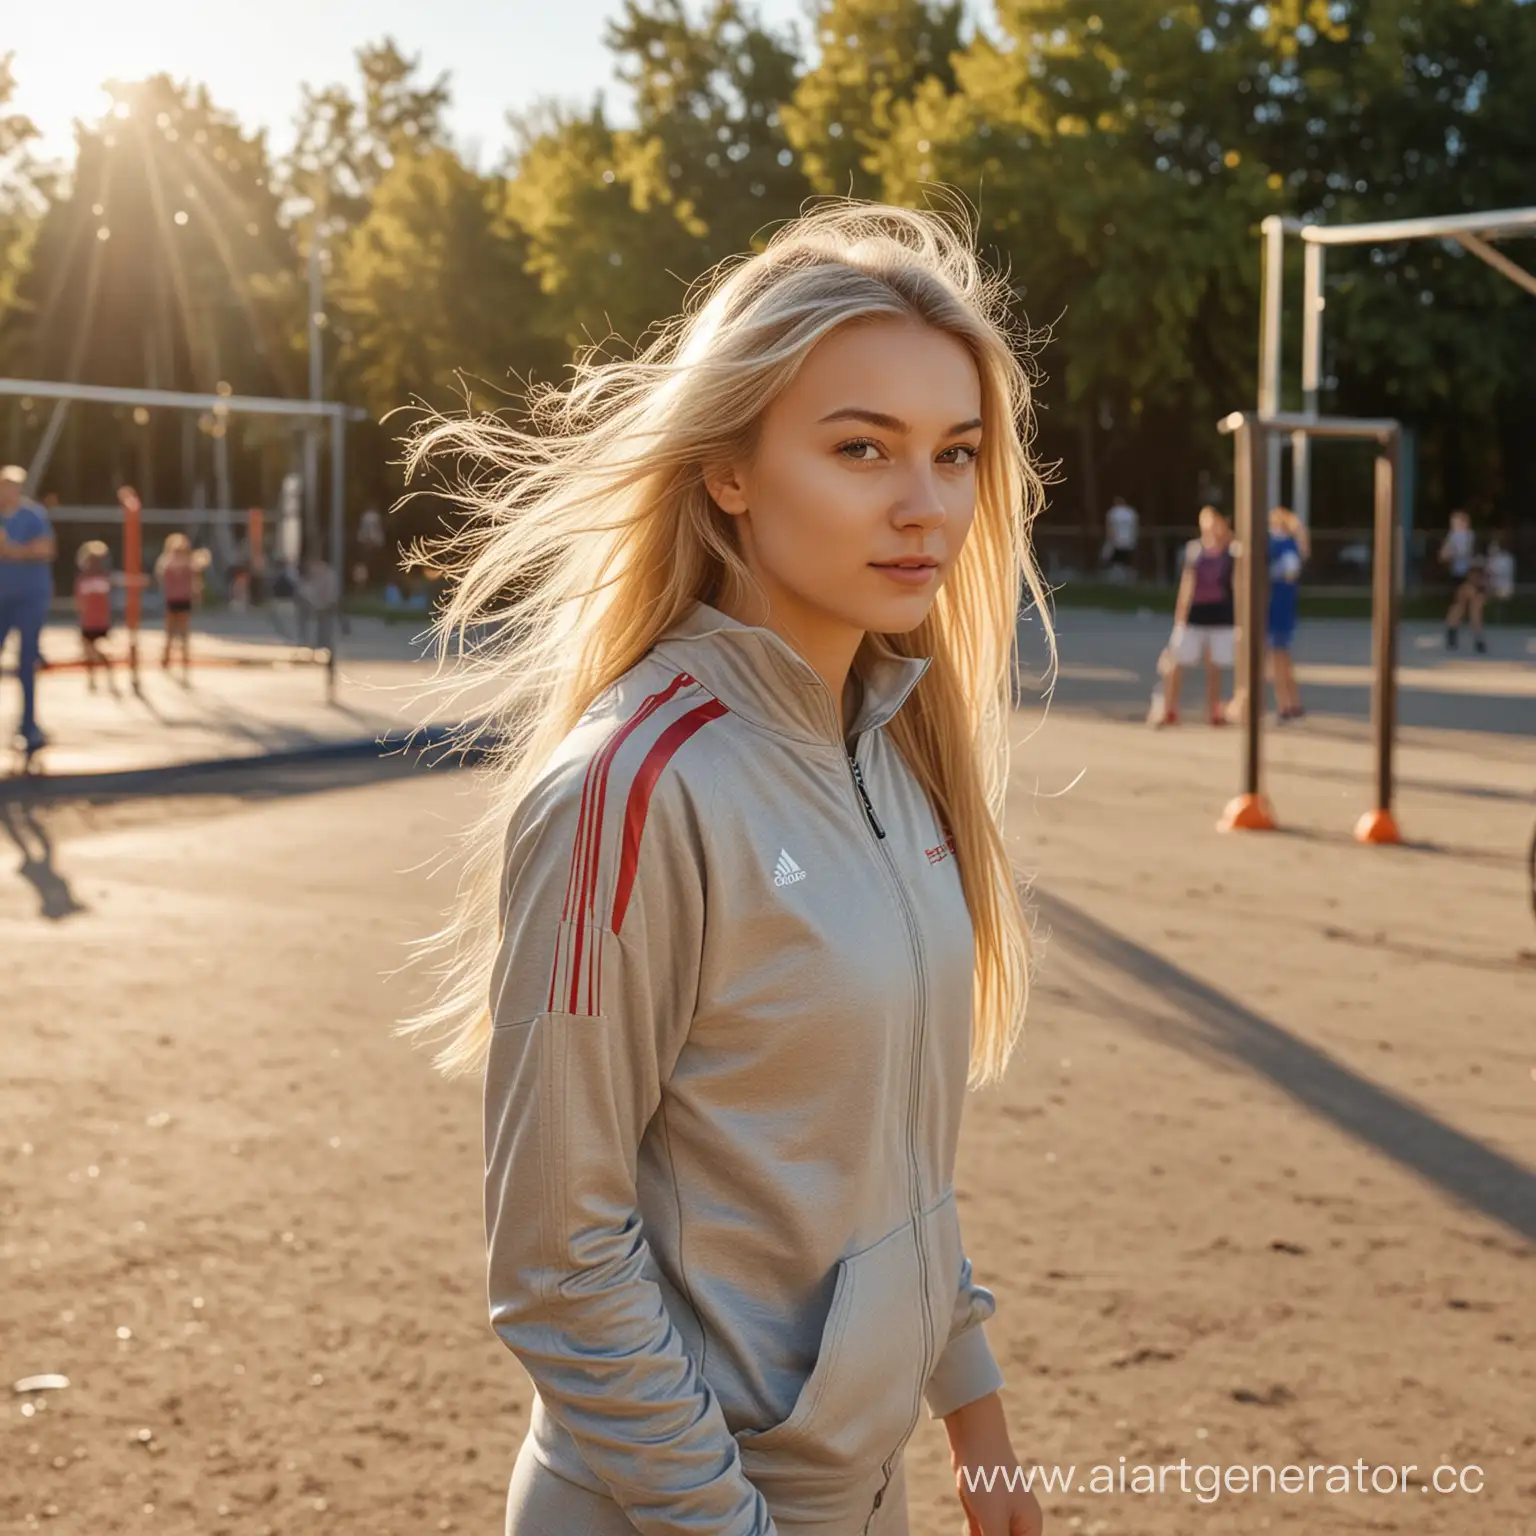 Vibrant-Morning-Energy-Slavic-Girl-on-Sunny-Sports-Field